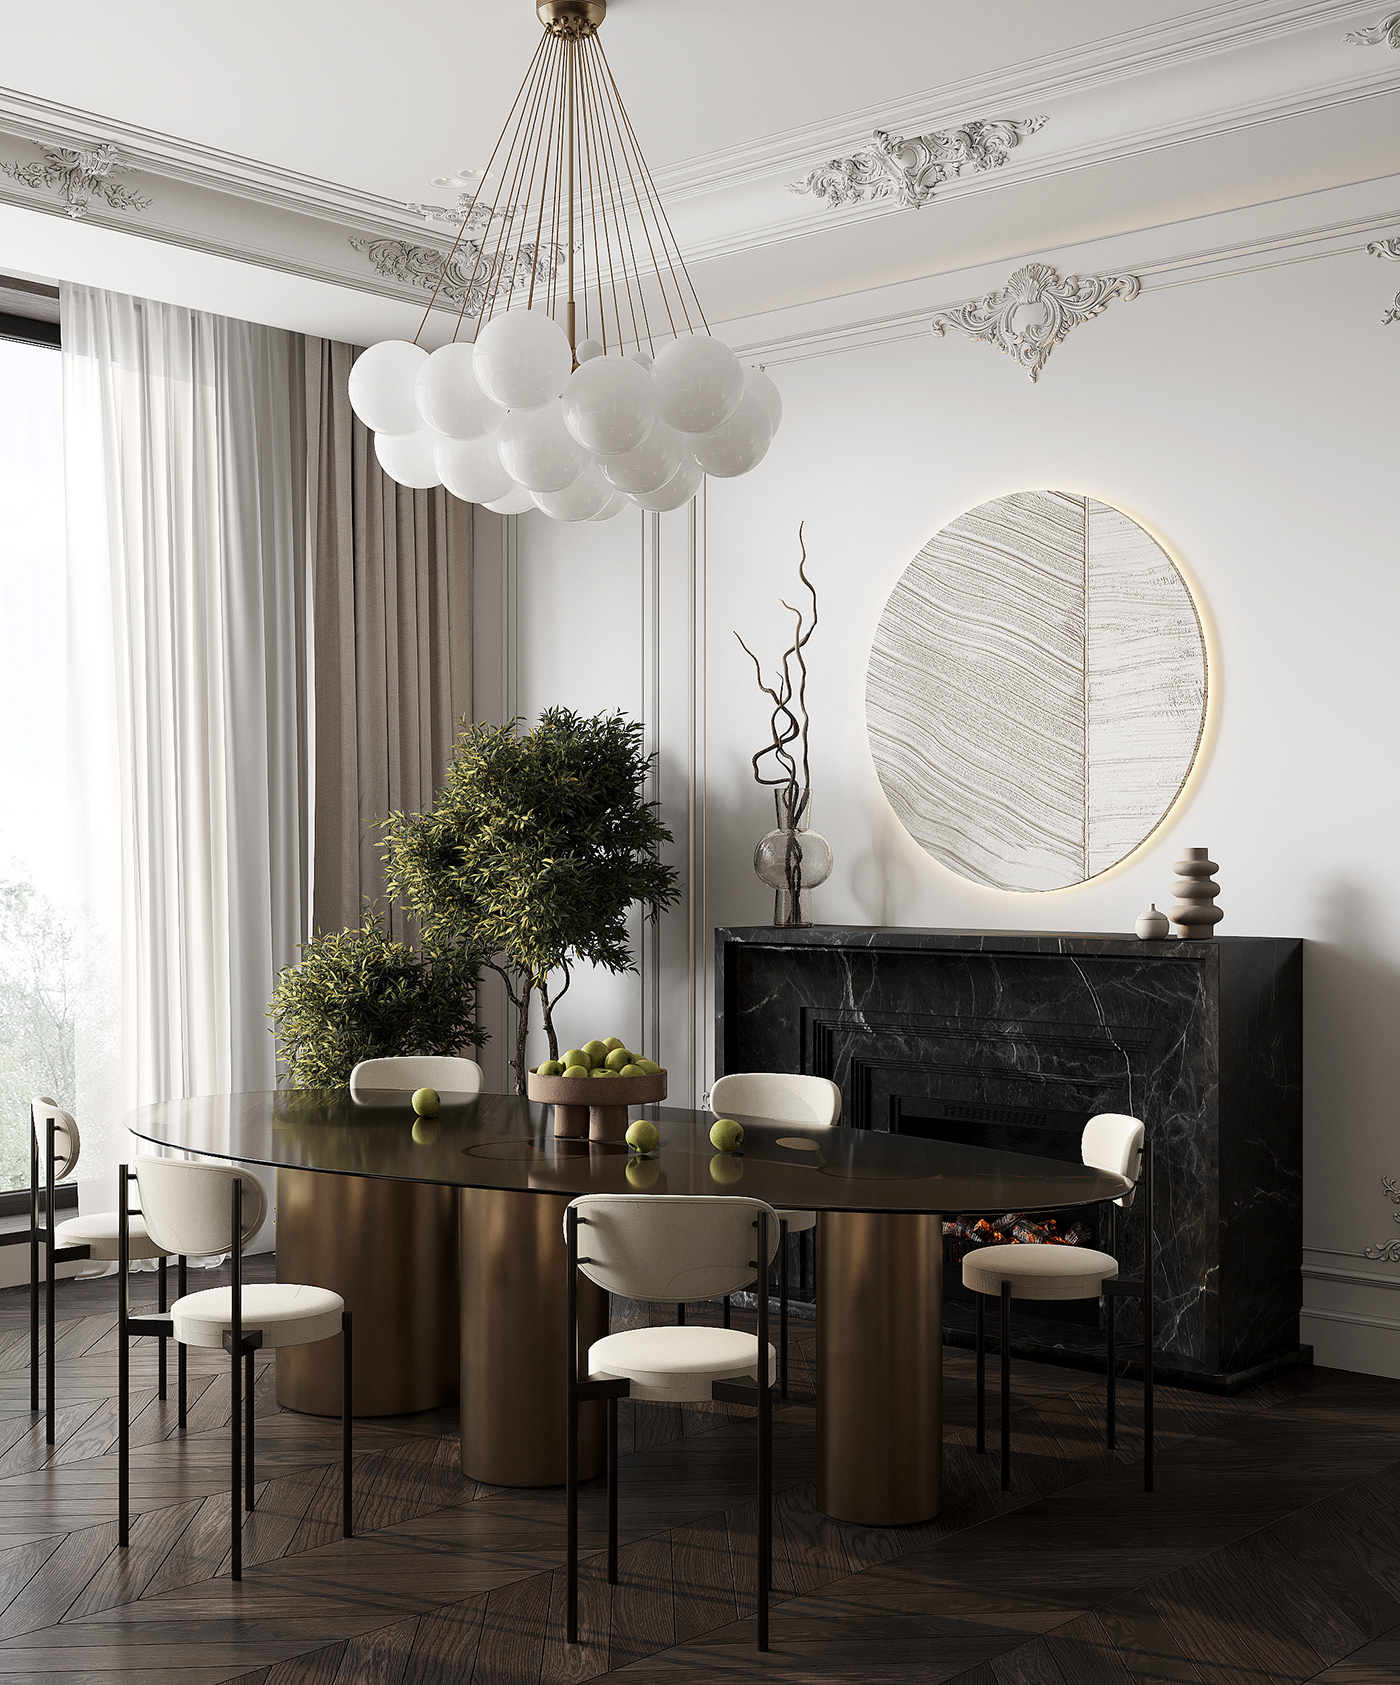 3ds max corona render  design Interior interior design  kitchen living room Render visualization